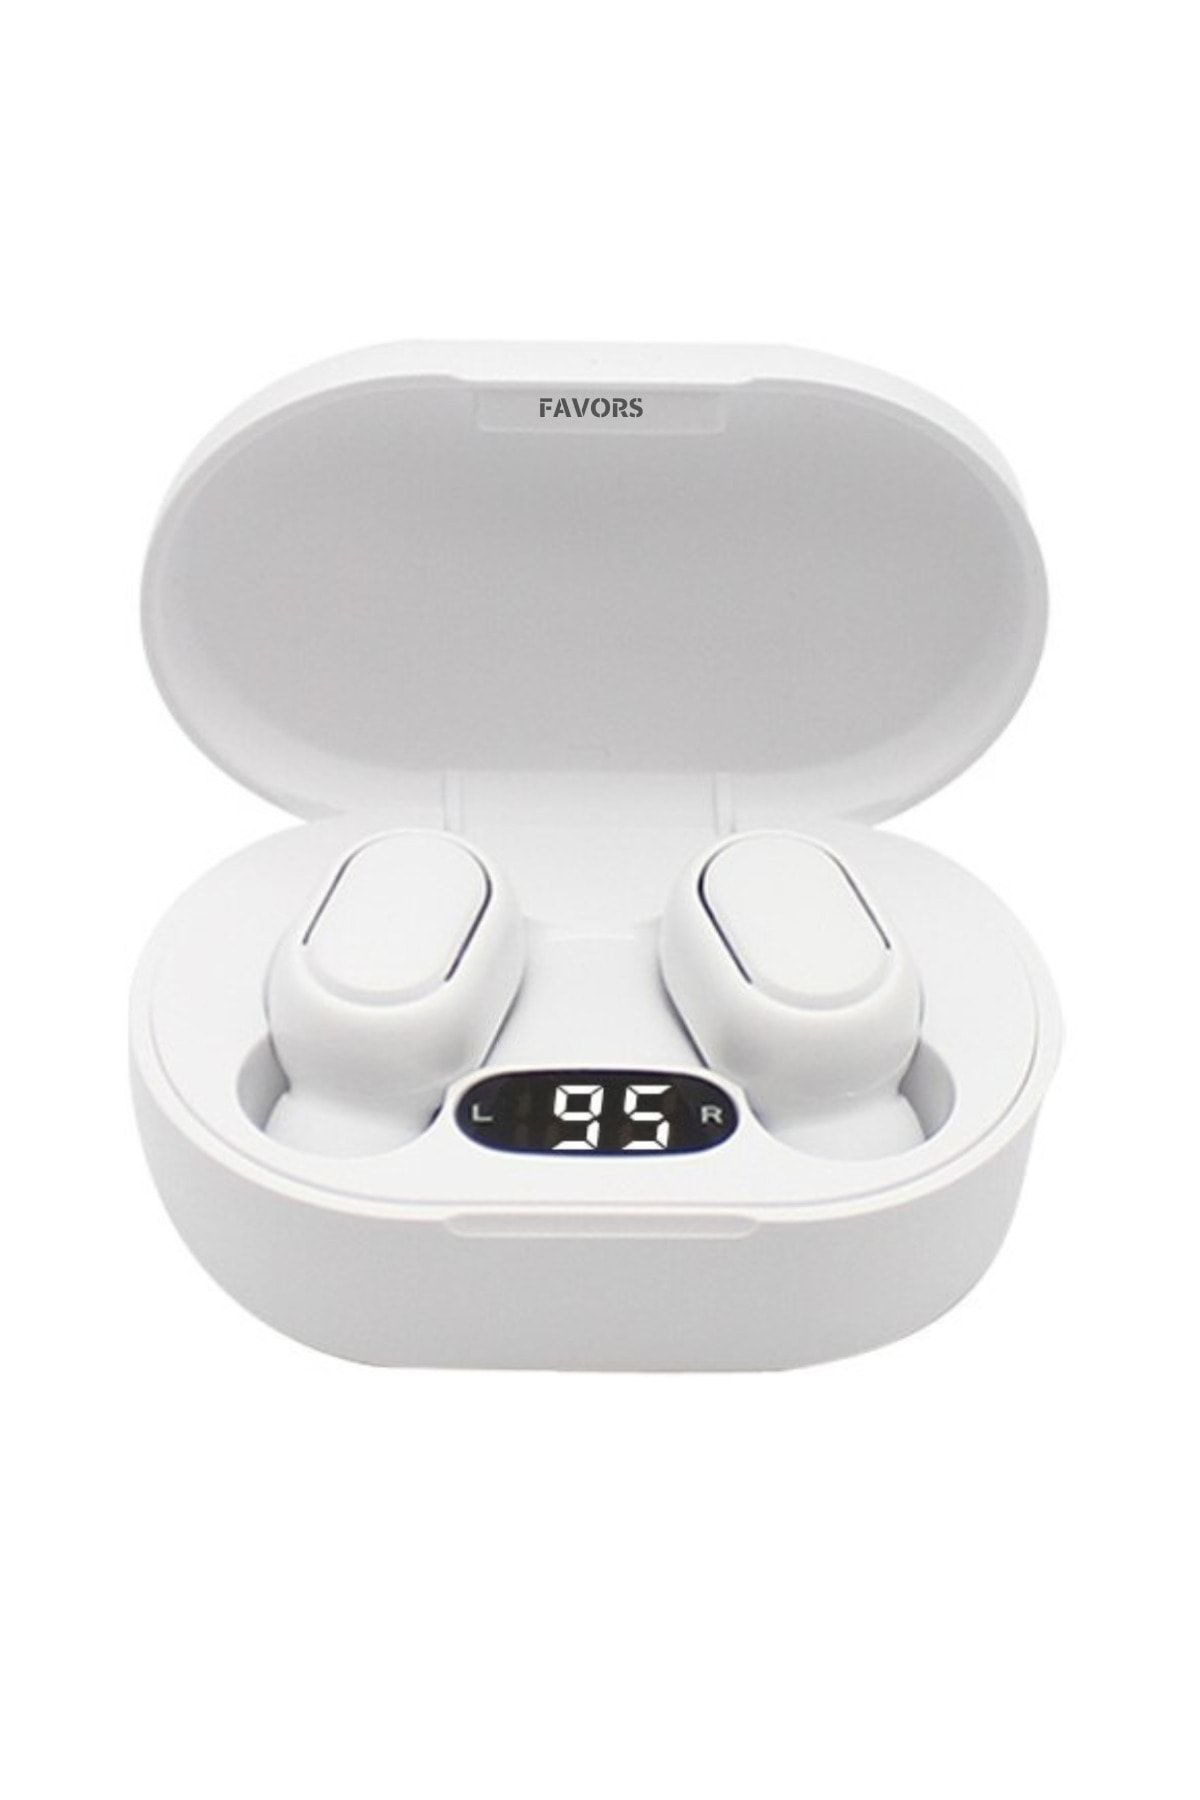 Favors E7s Dots Bluetooth Kulaklık Extra Bass Hd Ses Çift Mikrofon Universal Kablosuz Kulaklık Beyaz E7s